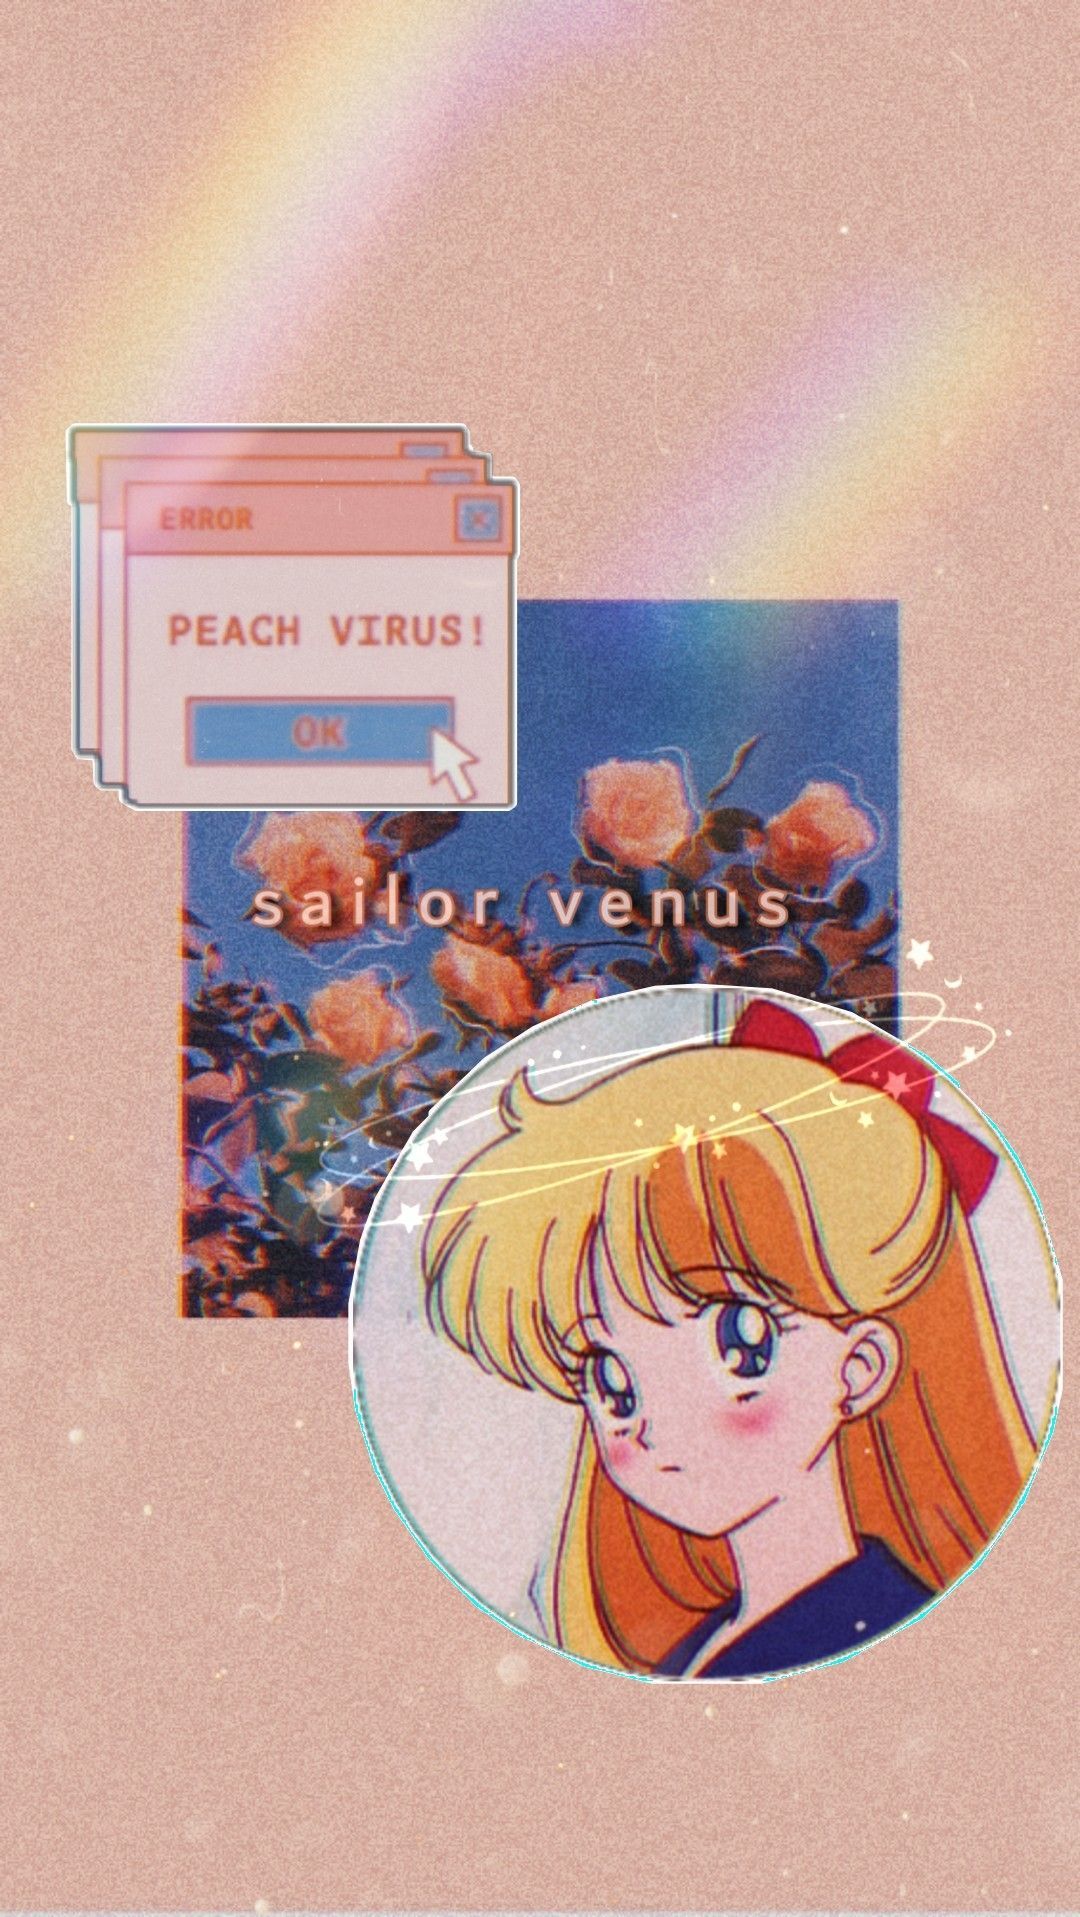 Peach aesthetic wallpaper with sailor venus from sailor moon - Sailor Venus